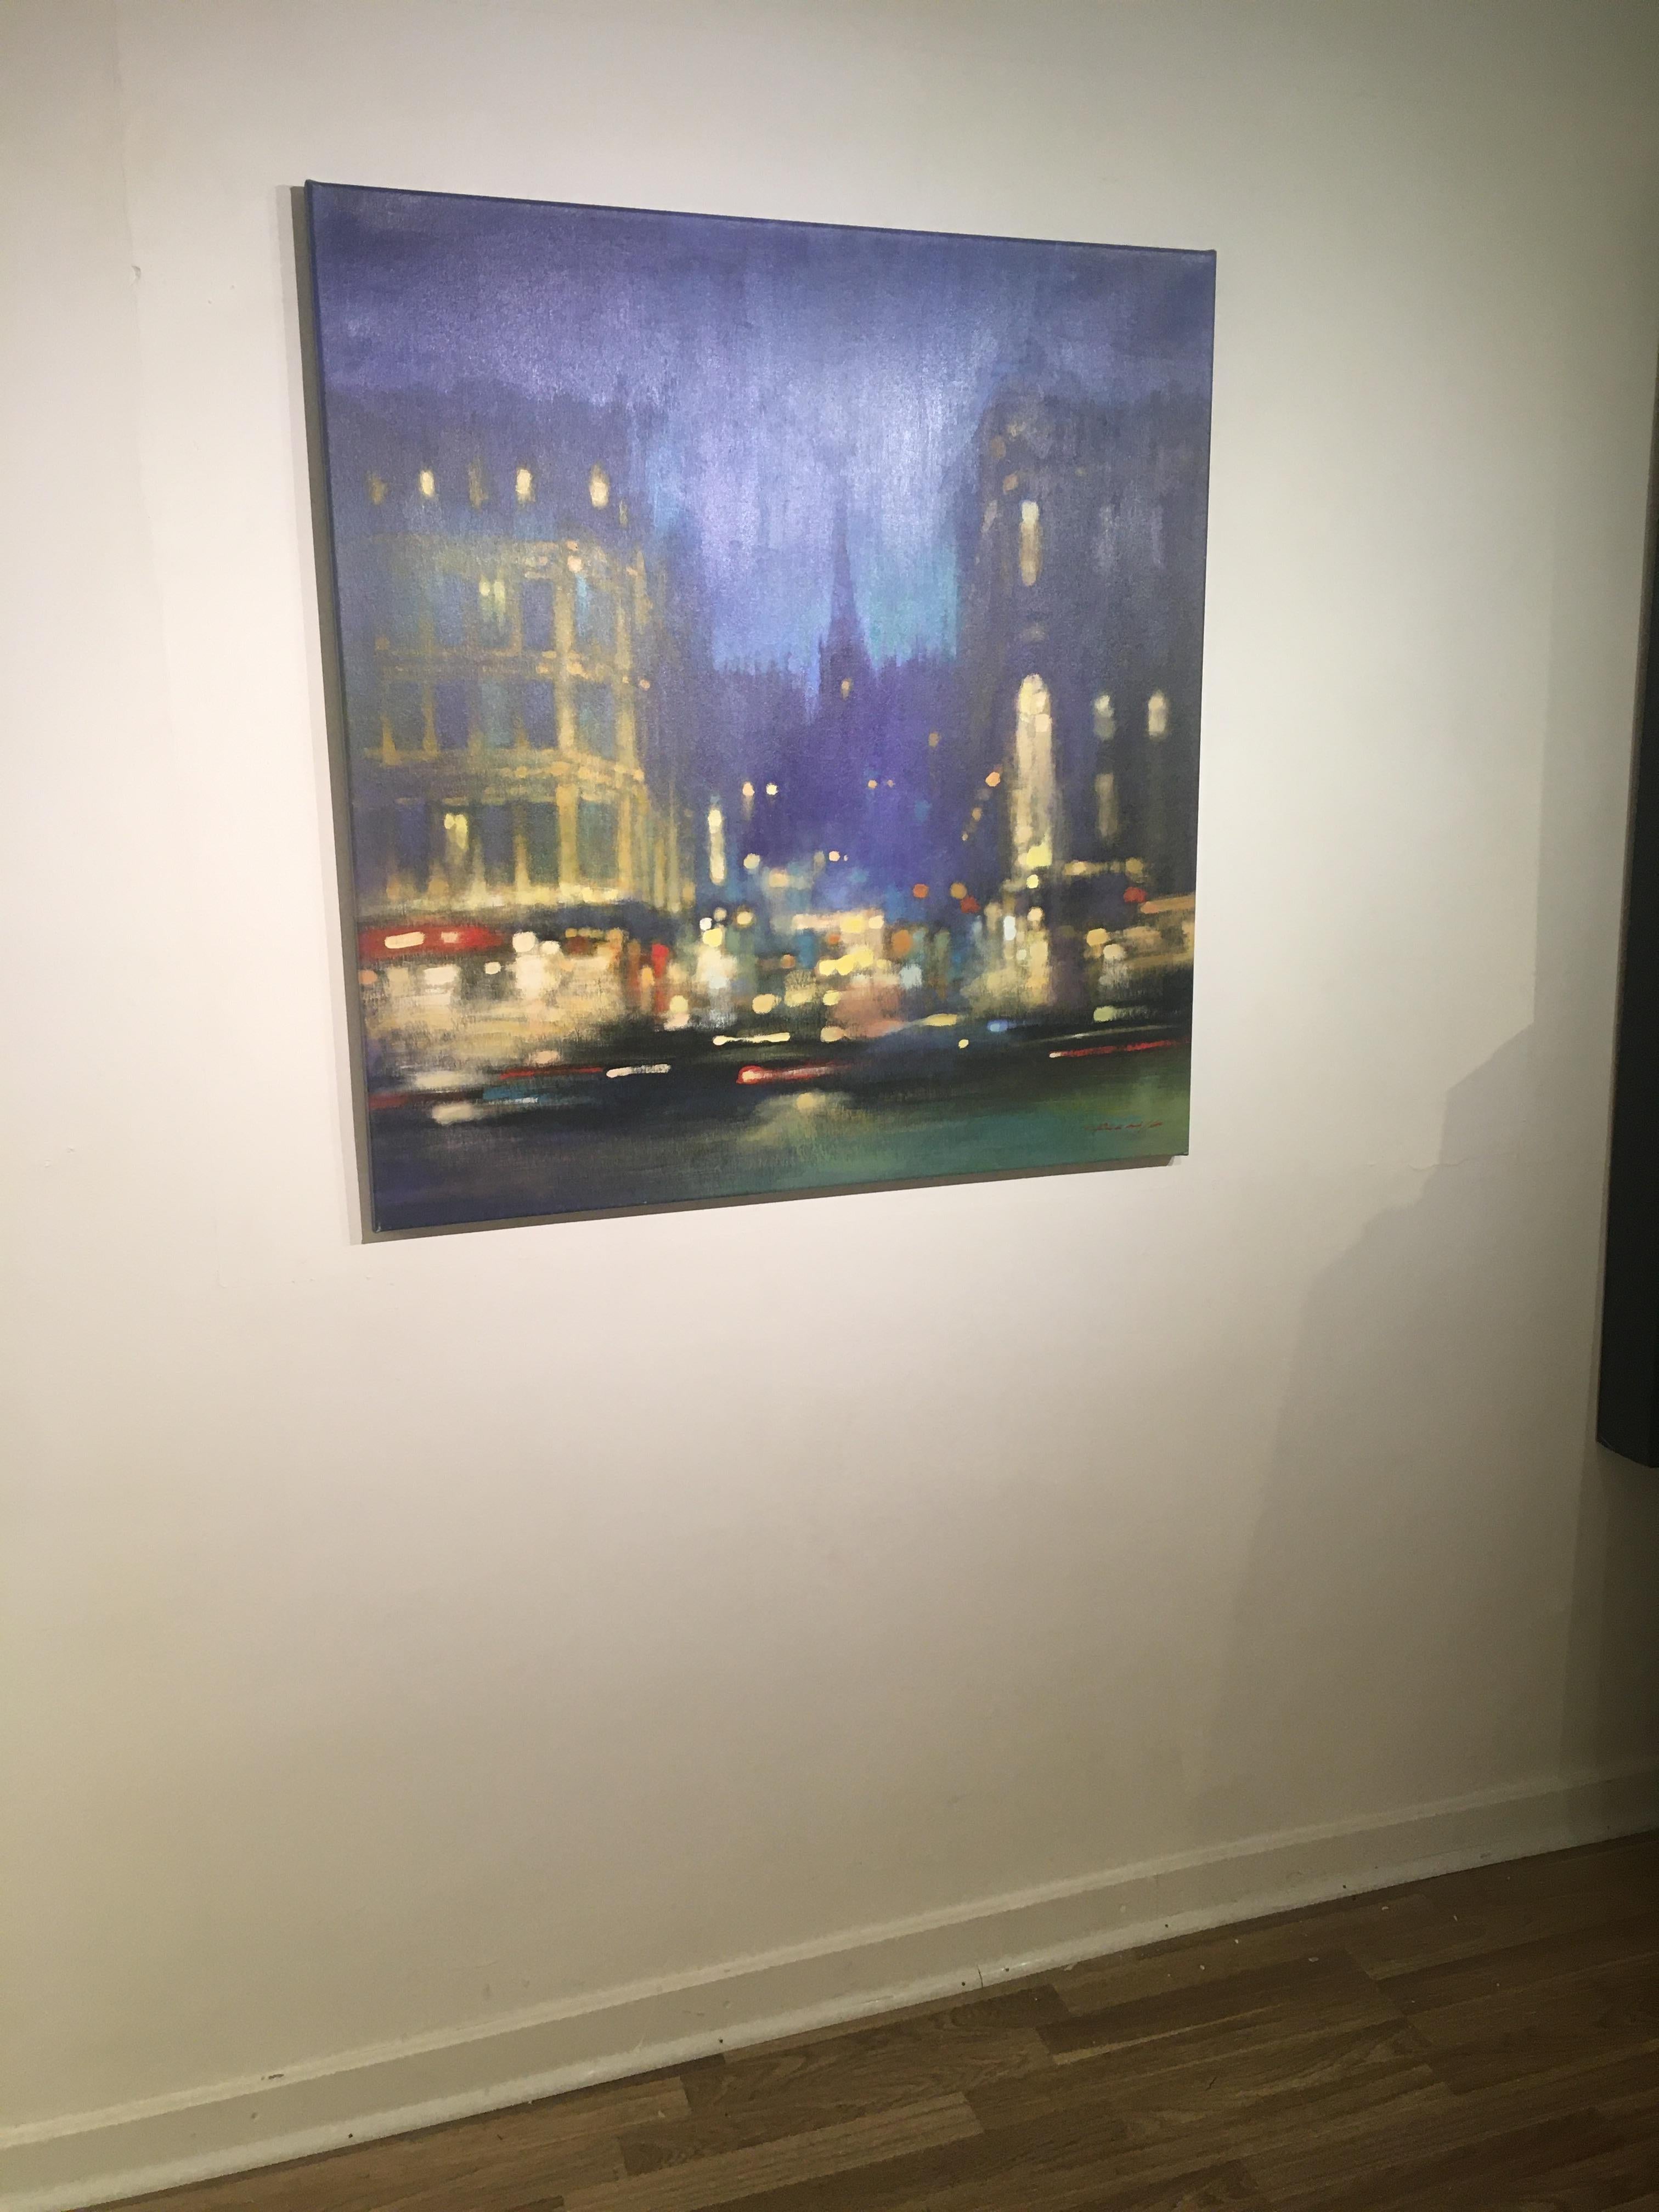 London Bustle by Night - contemporary impressionist night London cityscape - Contemporary Painting by David Hinchliffe